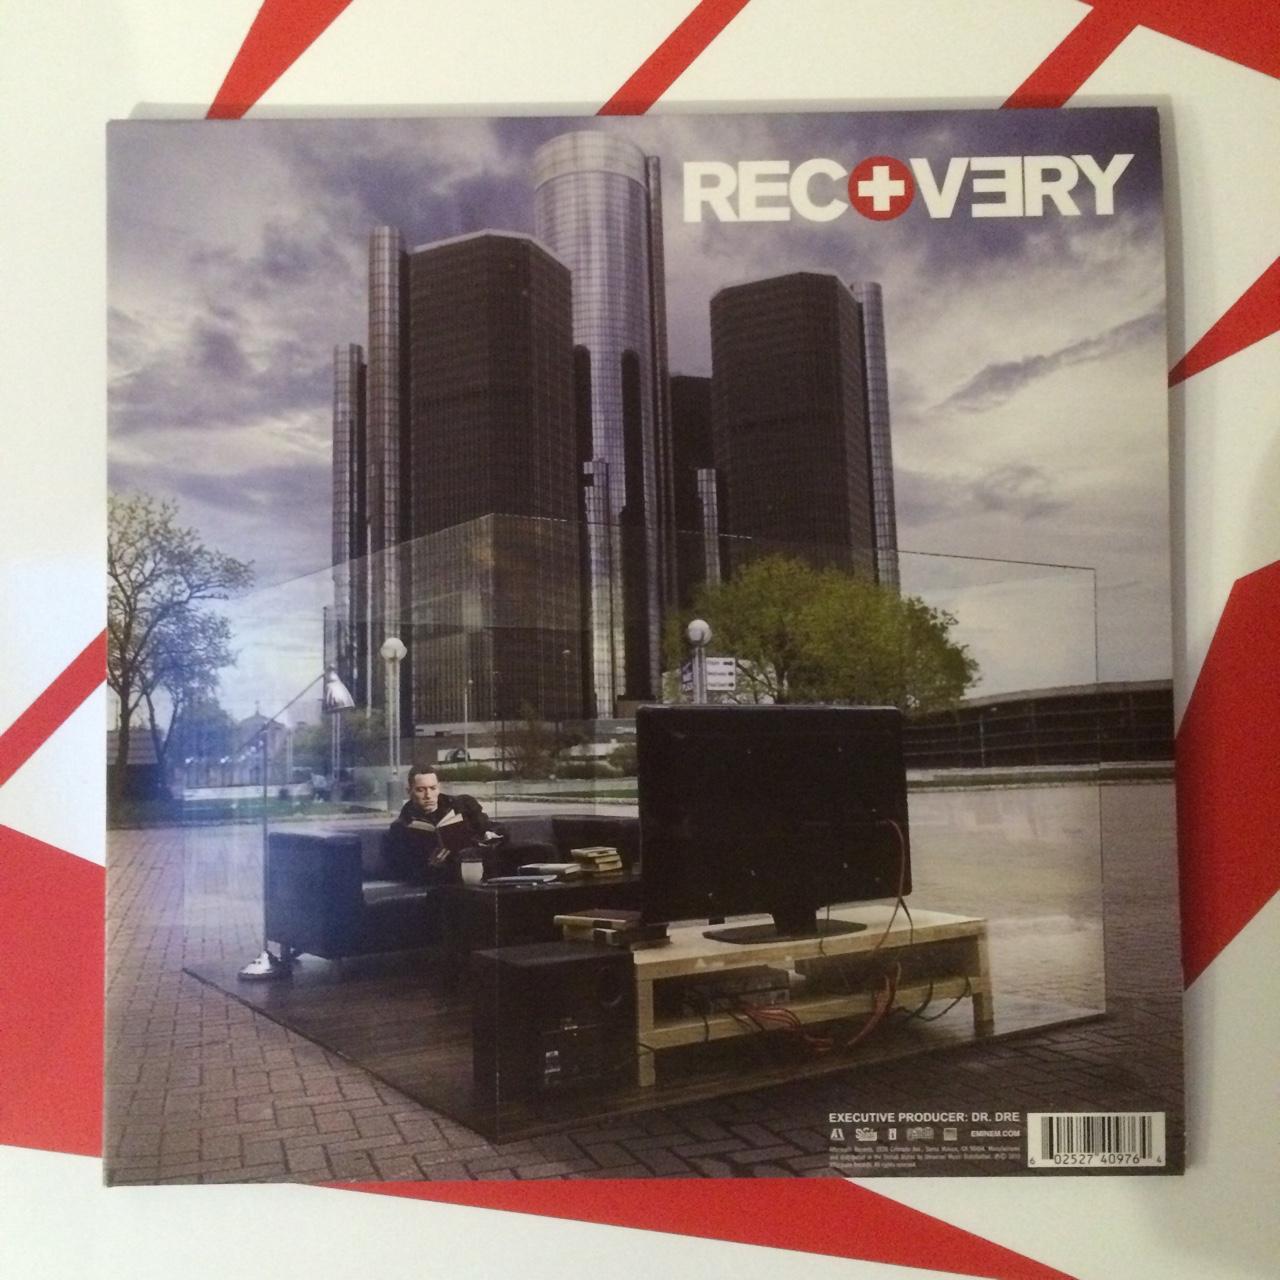 EMINEM - Recovery Vinyl